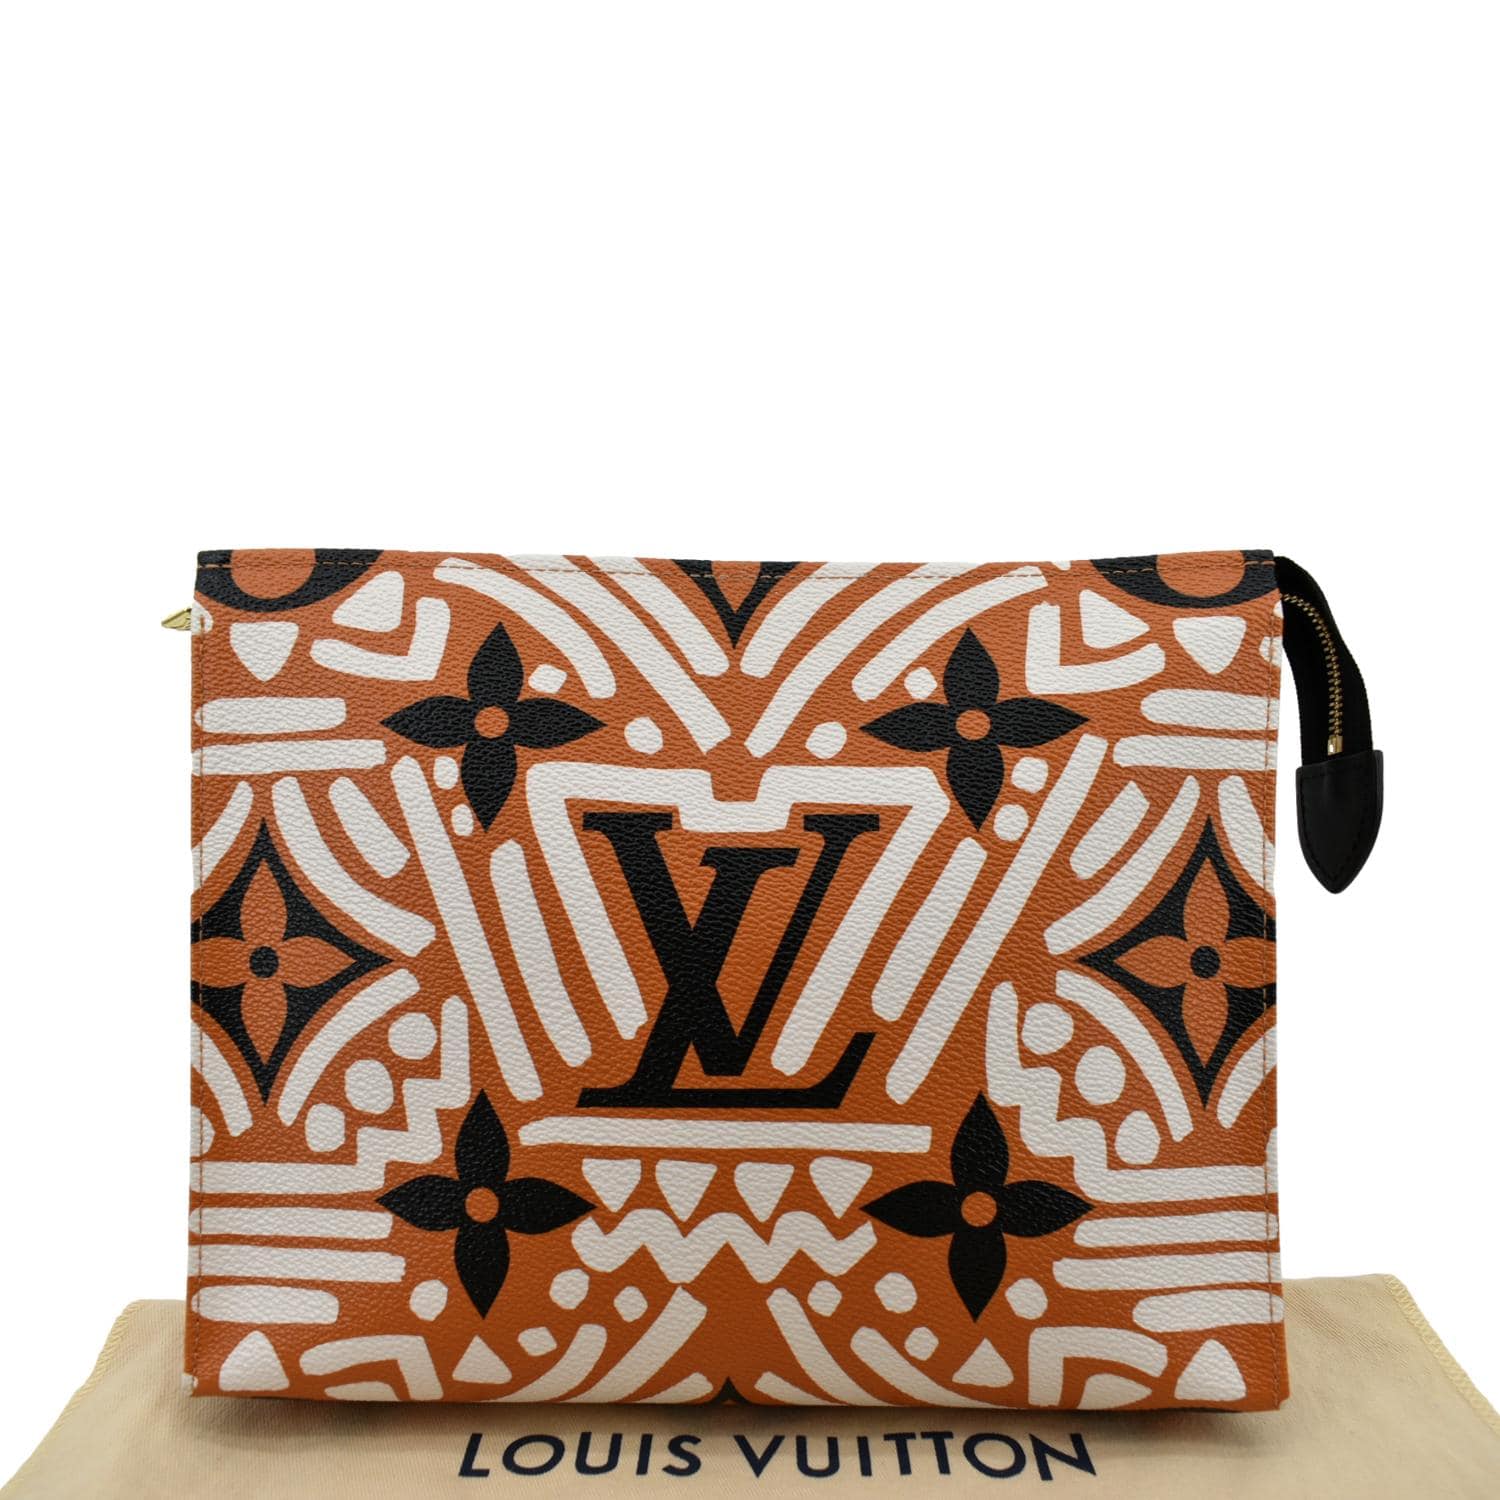 Louis Vuitton New 2020 Limited Toiletry 26 Monogram Canvas Clutch